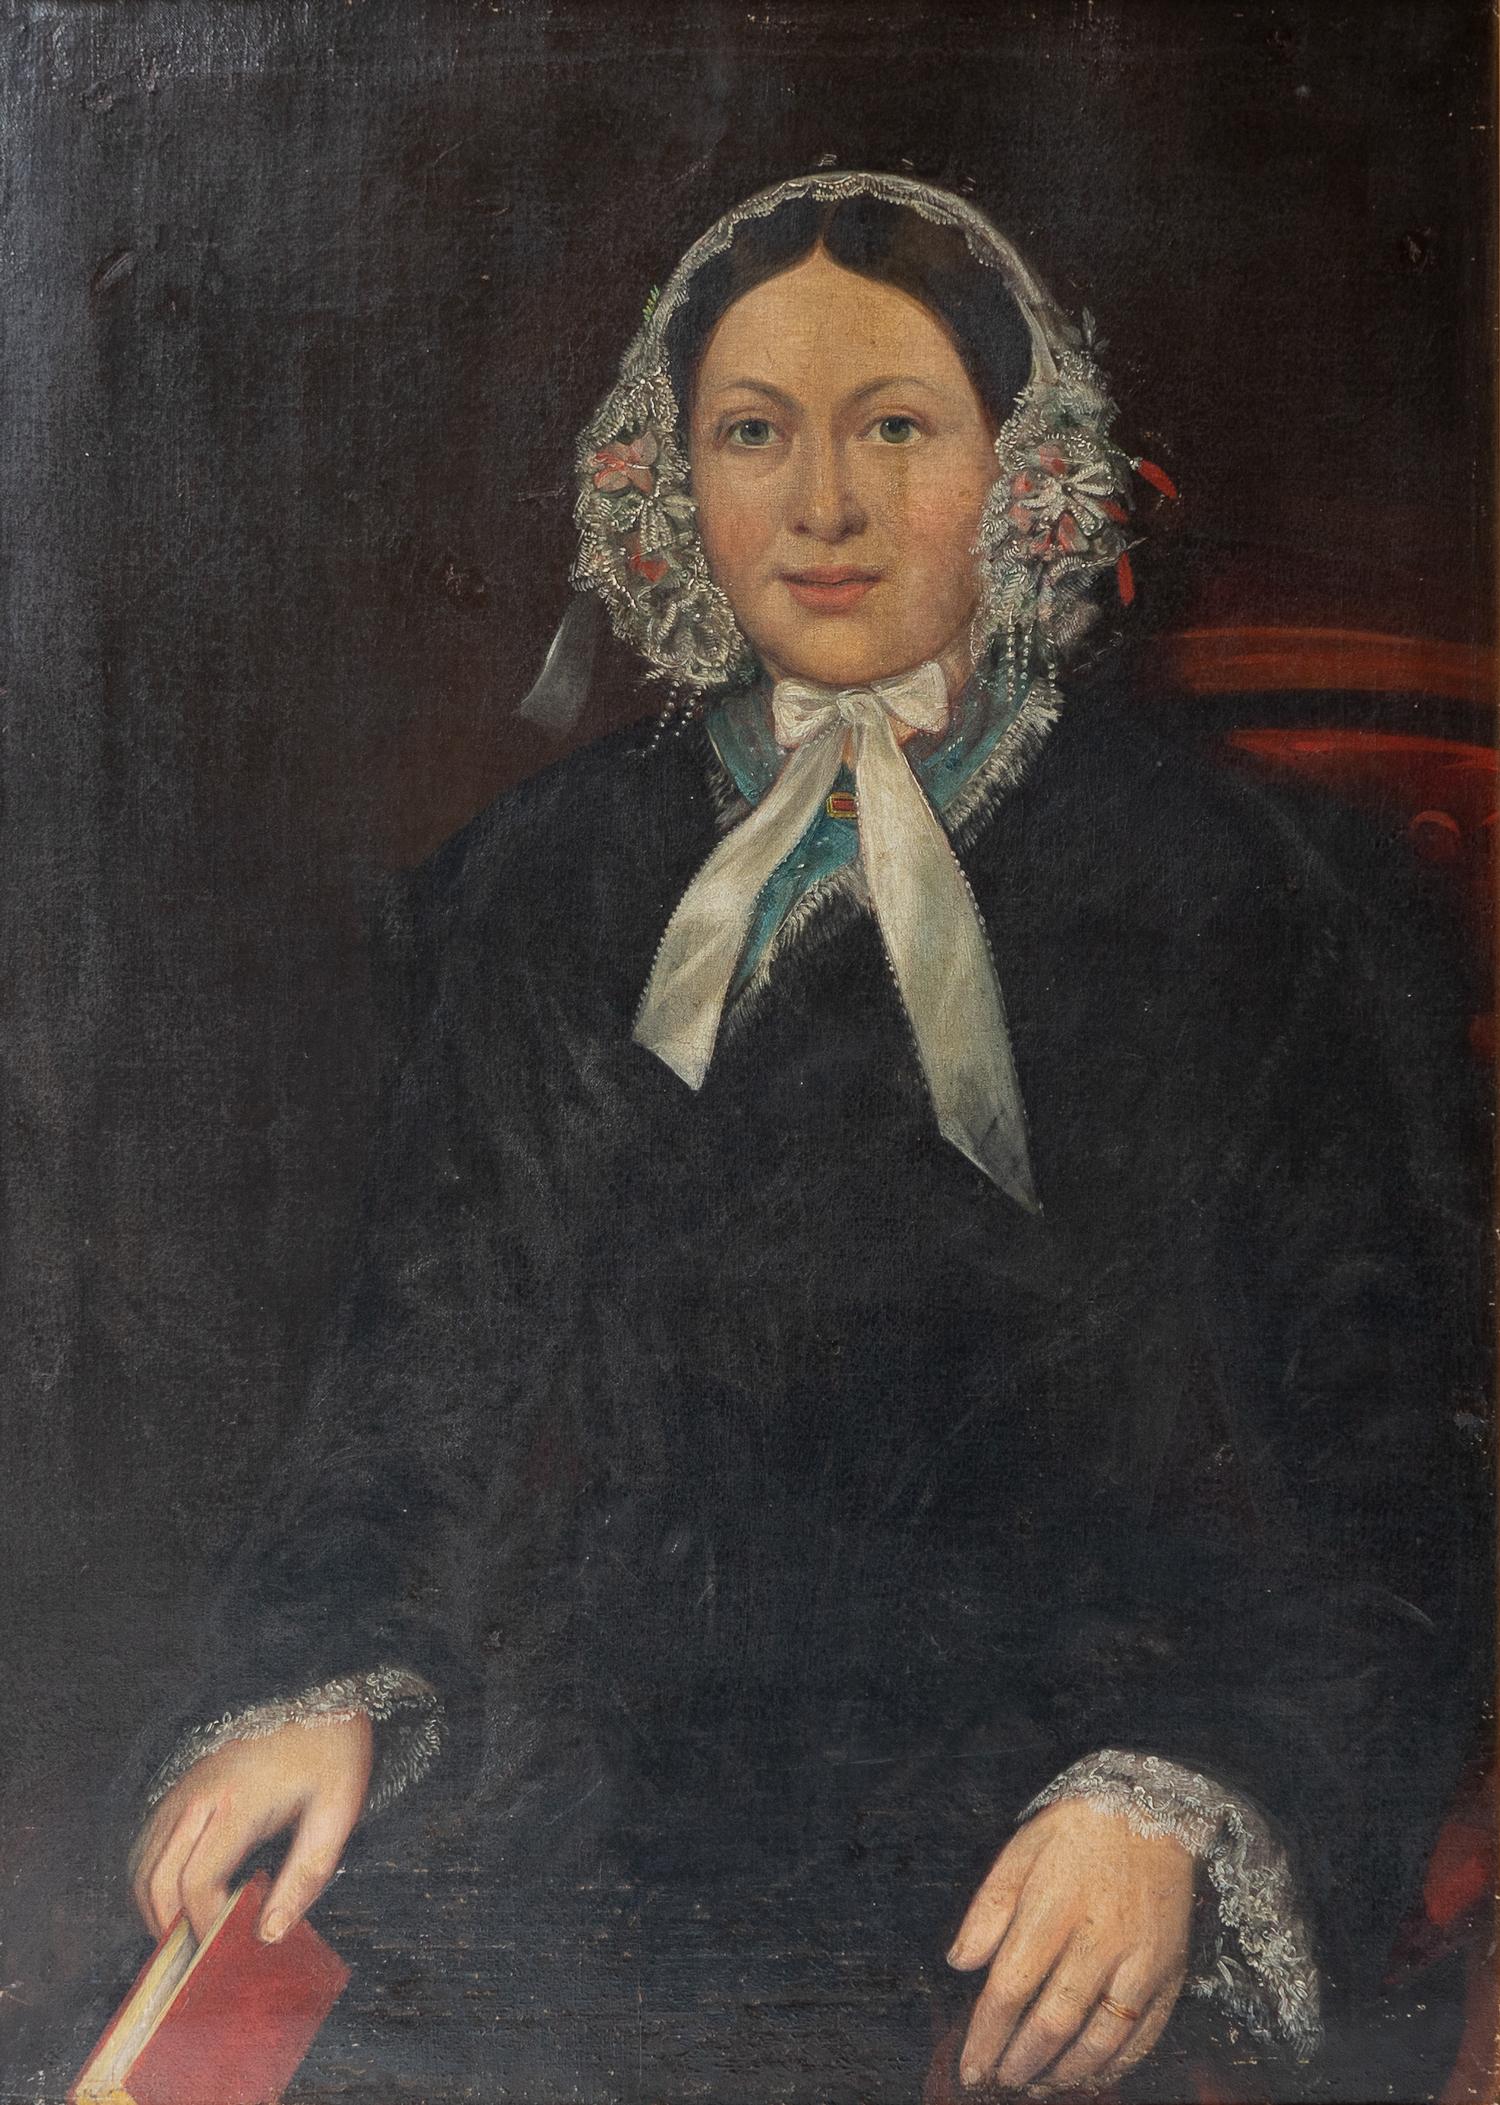  Large Portrait Of A Woman In A Lace Cap, Antique Original Oil Painting, 1830s For Sale 1